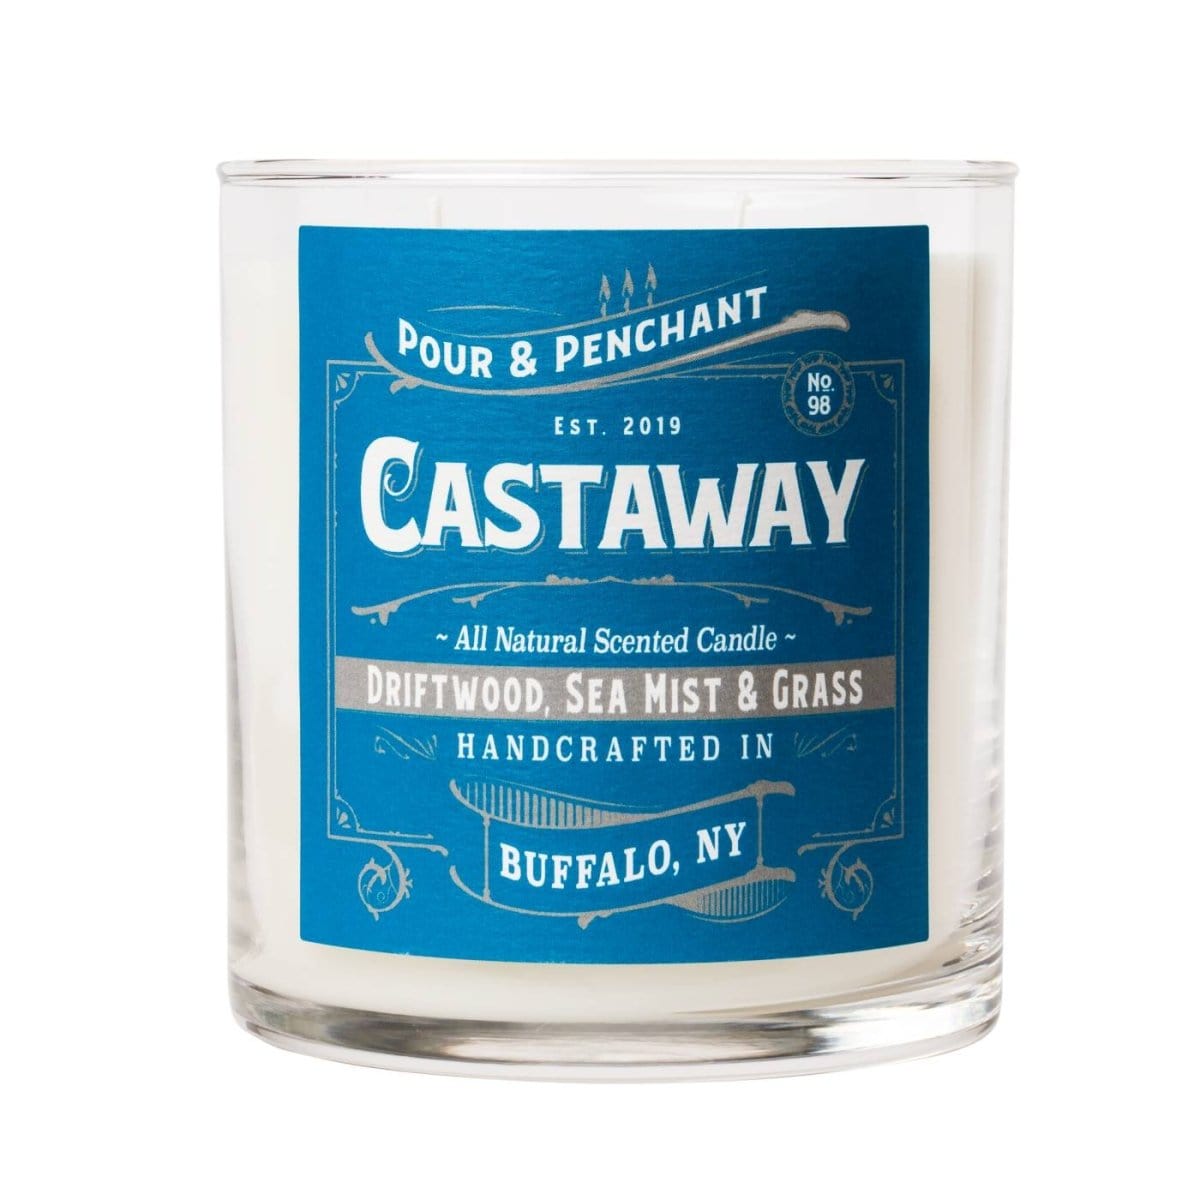 Pour & Penchant 10 oz Scented Candle - CASTAWAY no.98 - Driftwood, Sea Mist & Grass